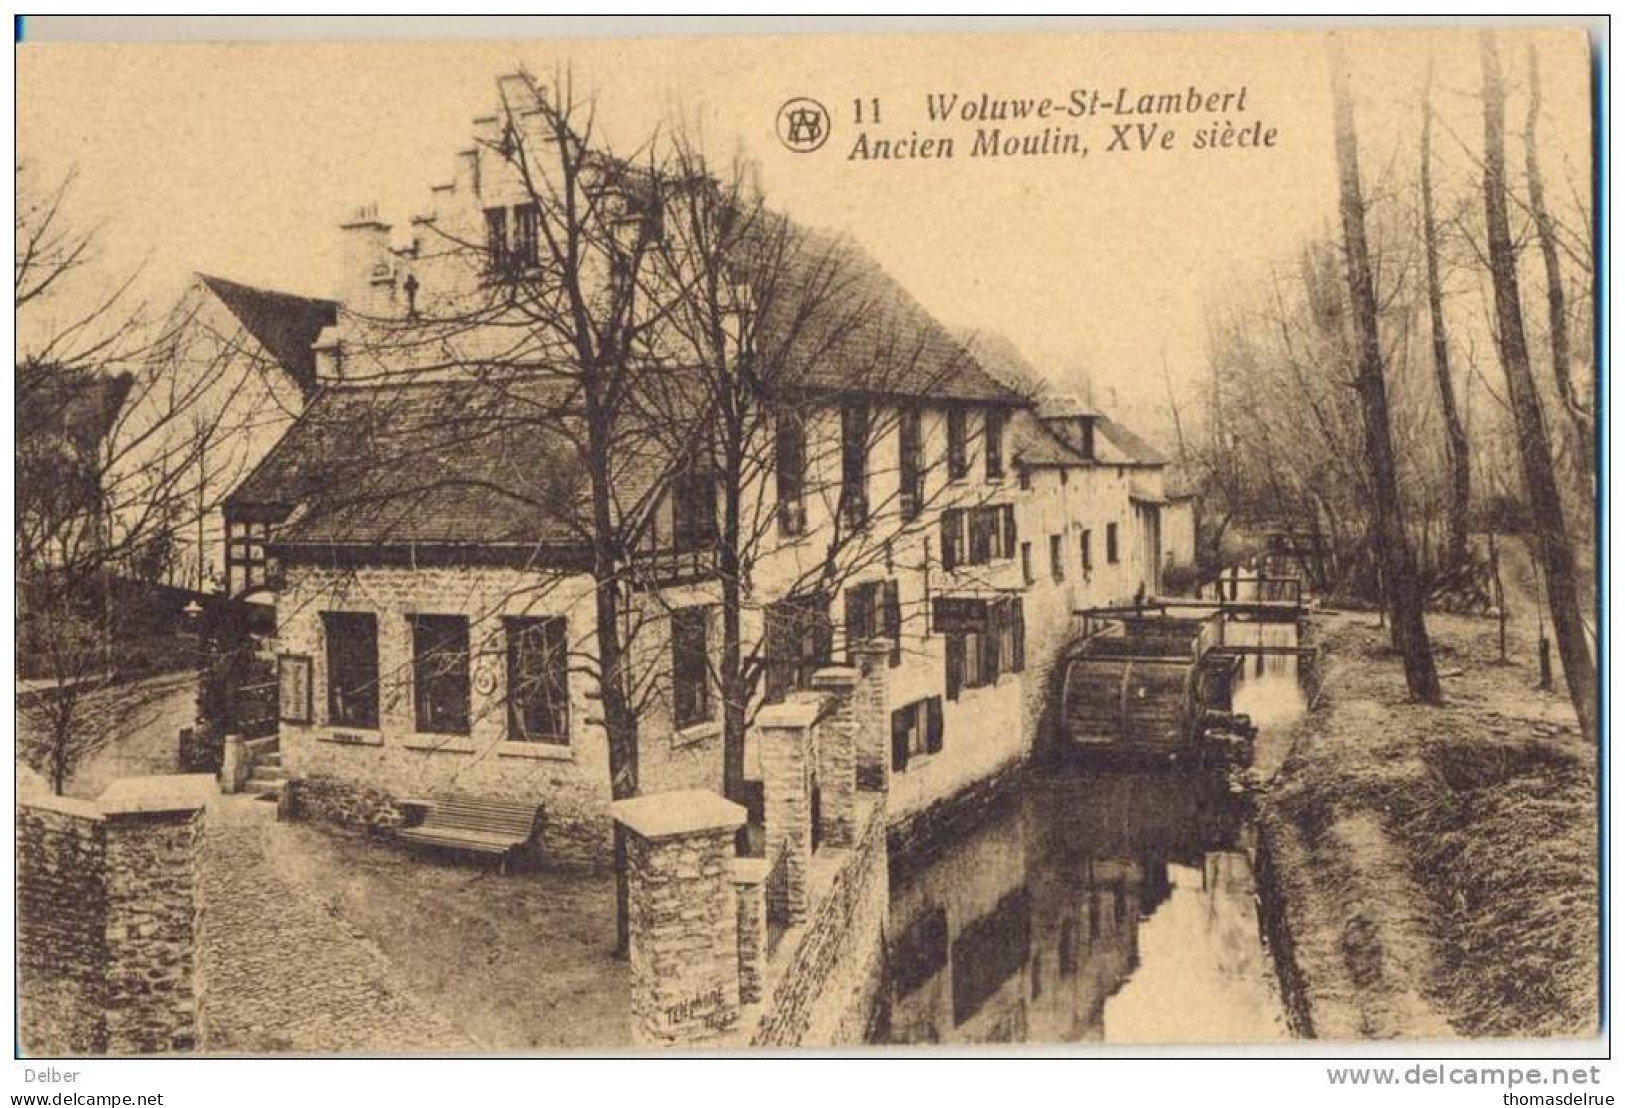 _Np184:11 Woluwe-St-Lambert Ancien Moulin, XVe Siècle Clihé F. Walschaerts, Bruxelles - St-Lambrechts-Woluwe - Woluwe-St-Lambert